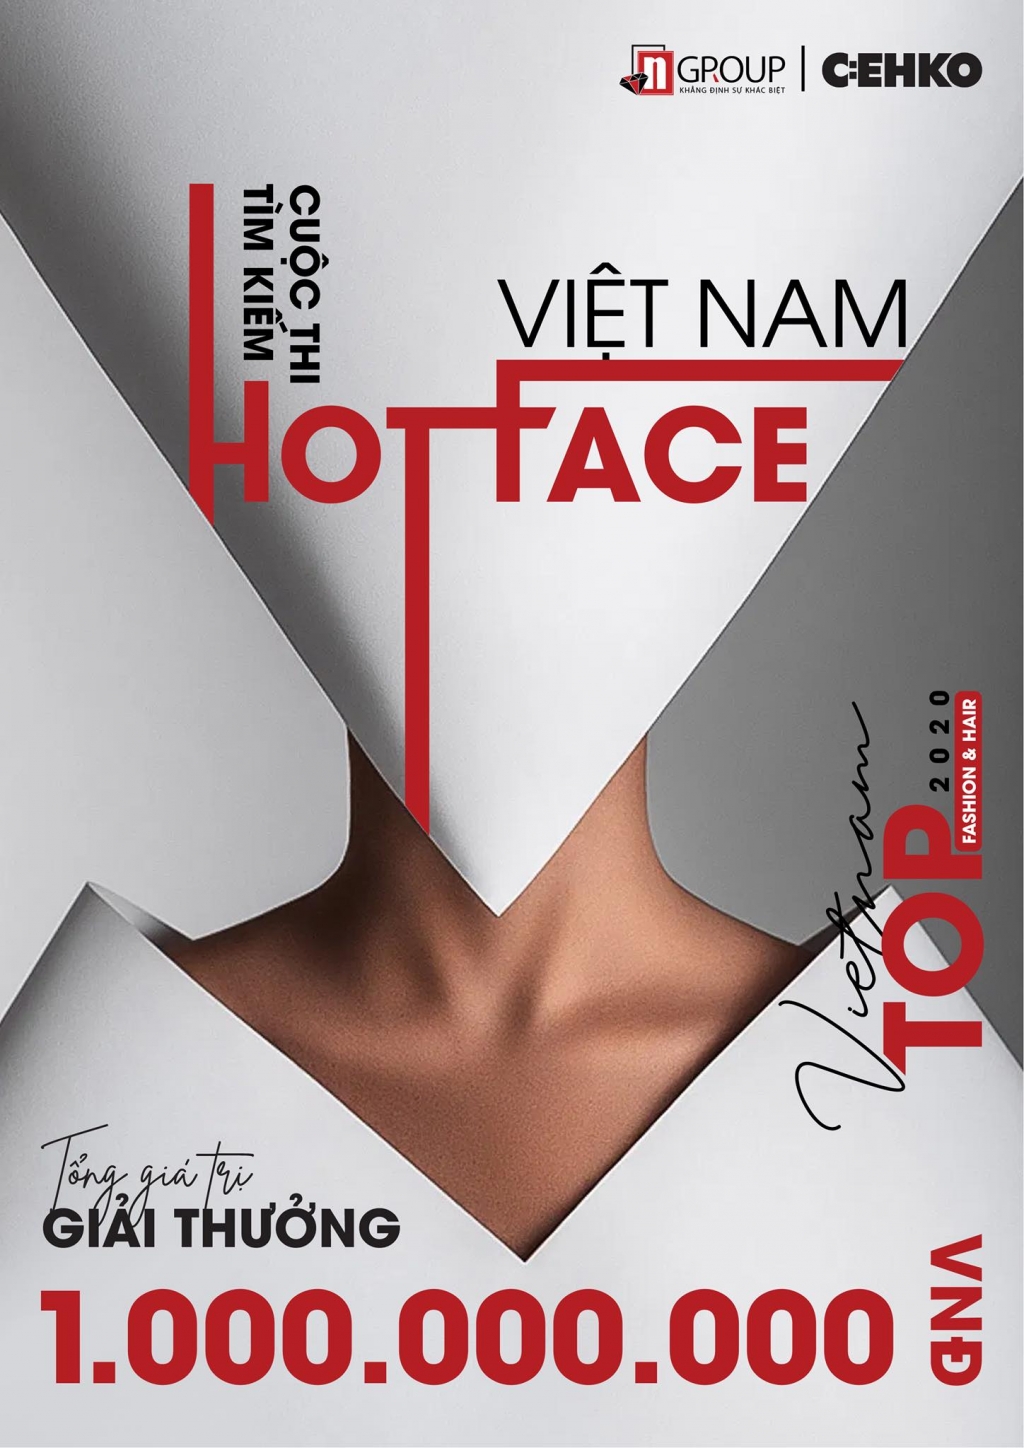 vietnam top fashion hair 2020 lan dau tien ntk thoi trang nguoi mau va nha tao mau toc dung cung tren mot san dau